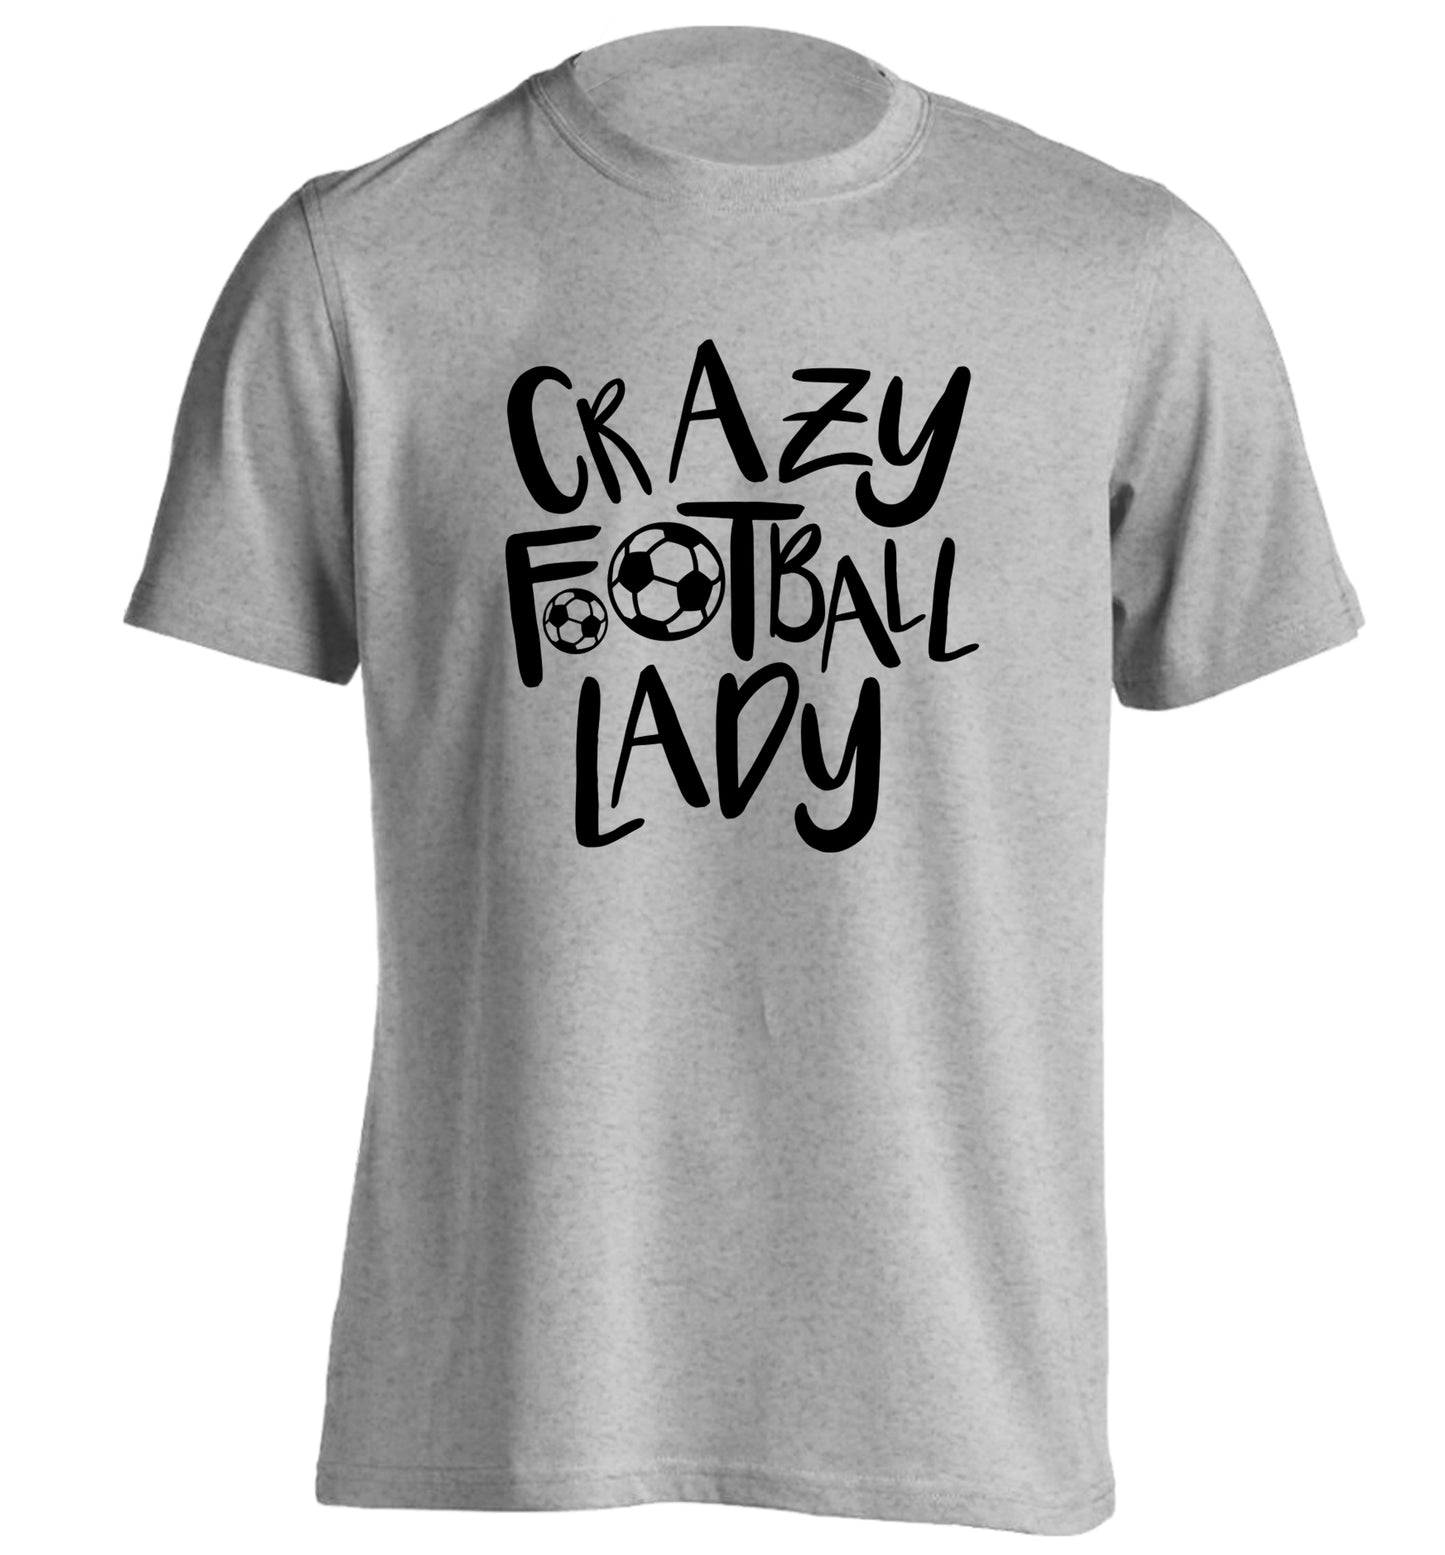 Crazy football lady adults unisexgrey Tshirt 2XL